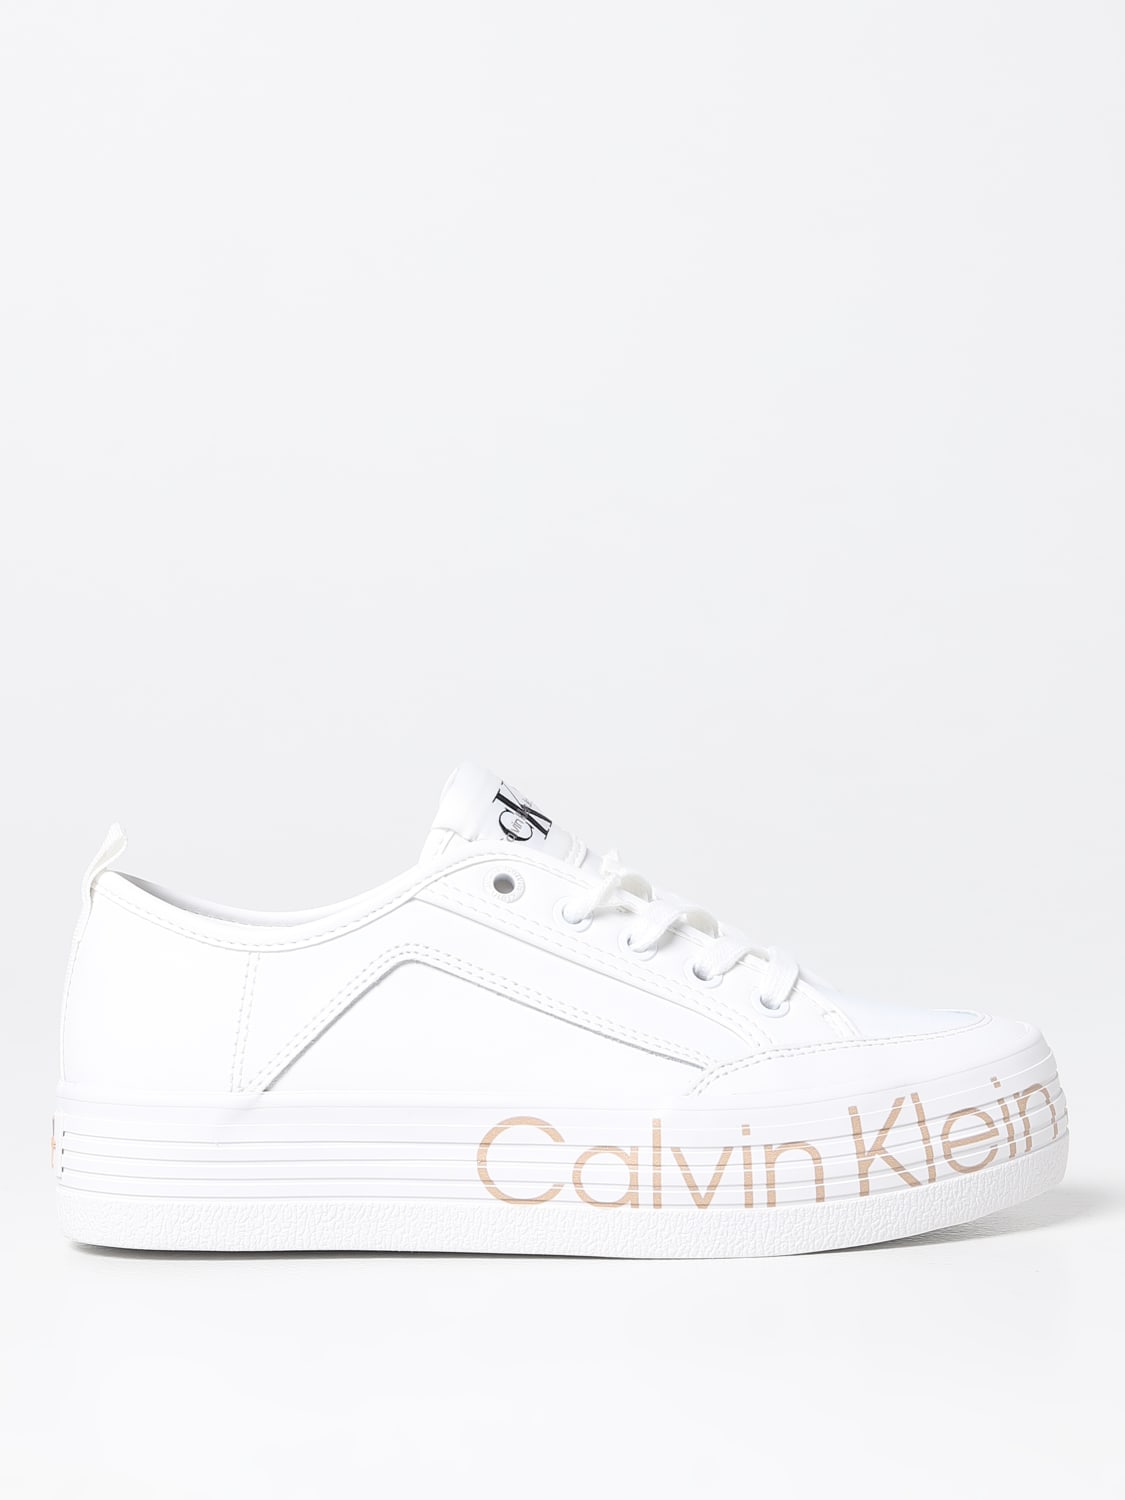 Adivinar Pilar carolino CALVIN KLEIN: Zapatillas para mujer, Blanco | Zapatillas Calvin Klein  YW0YW01025 en línea en GIGLIO.COM